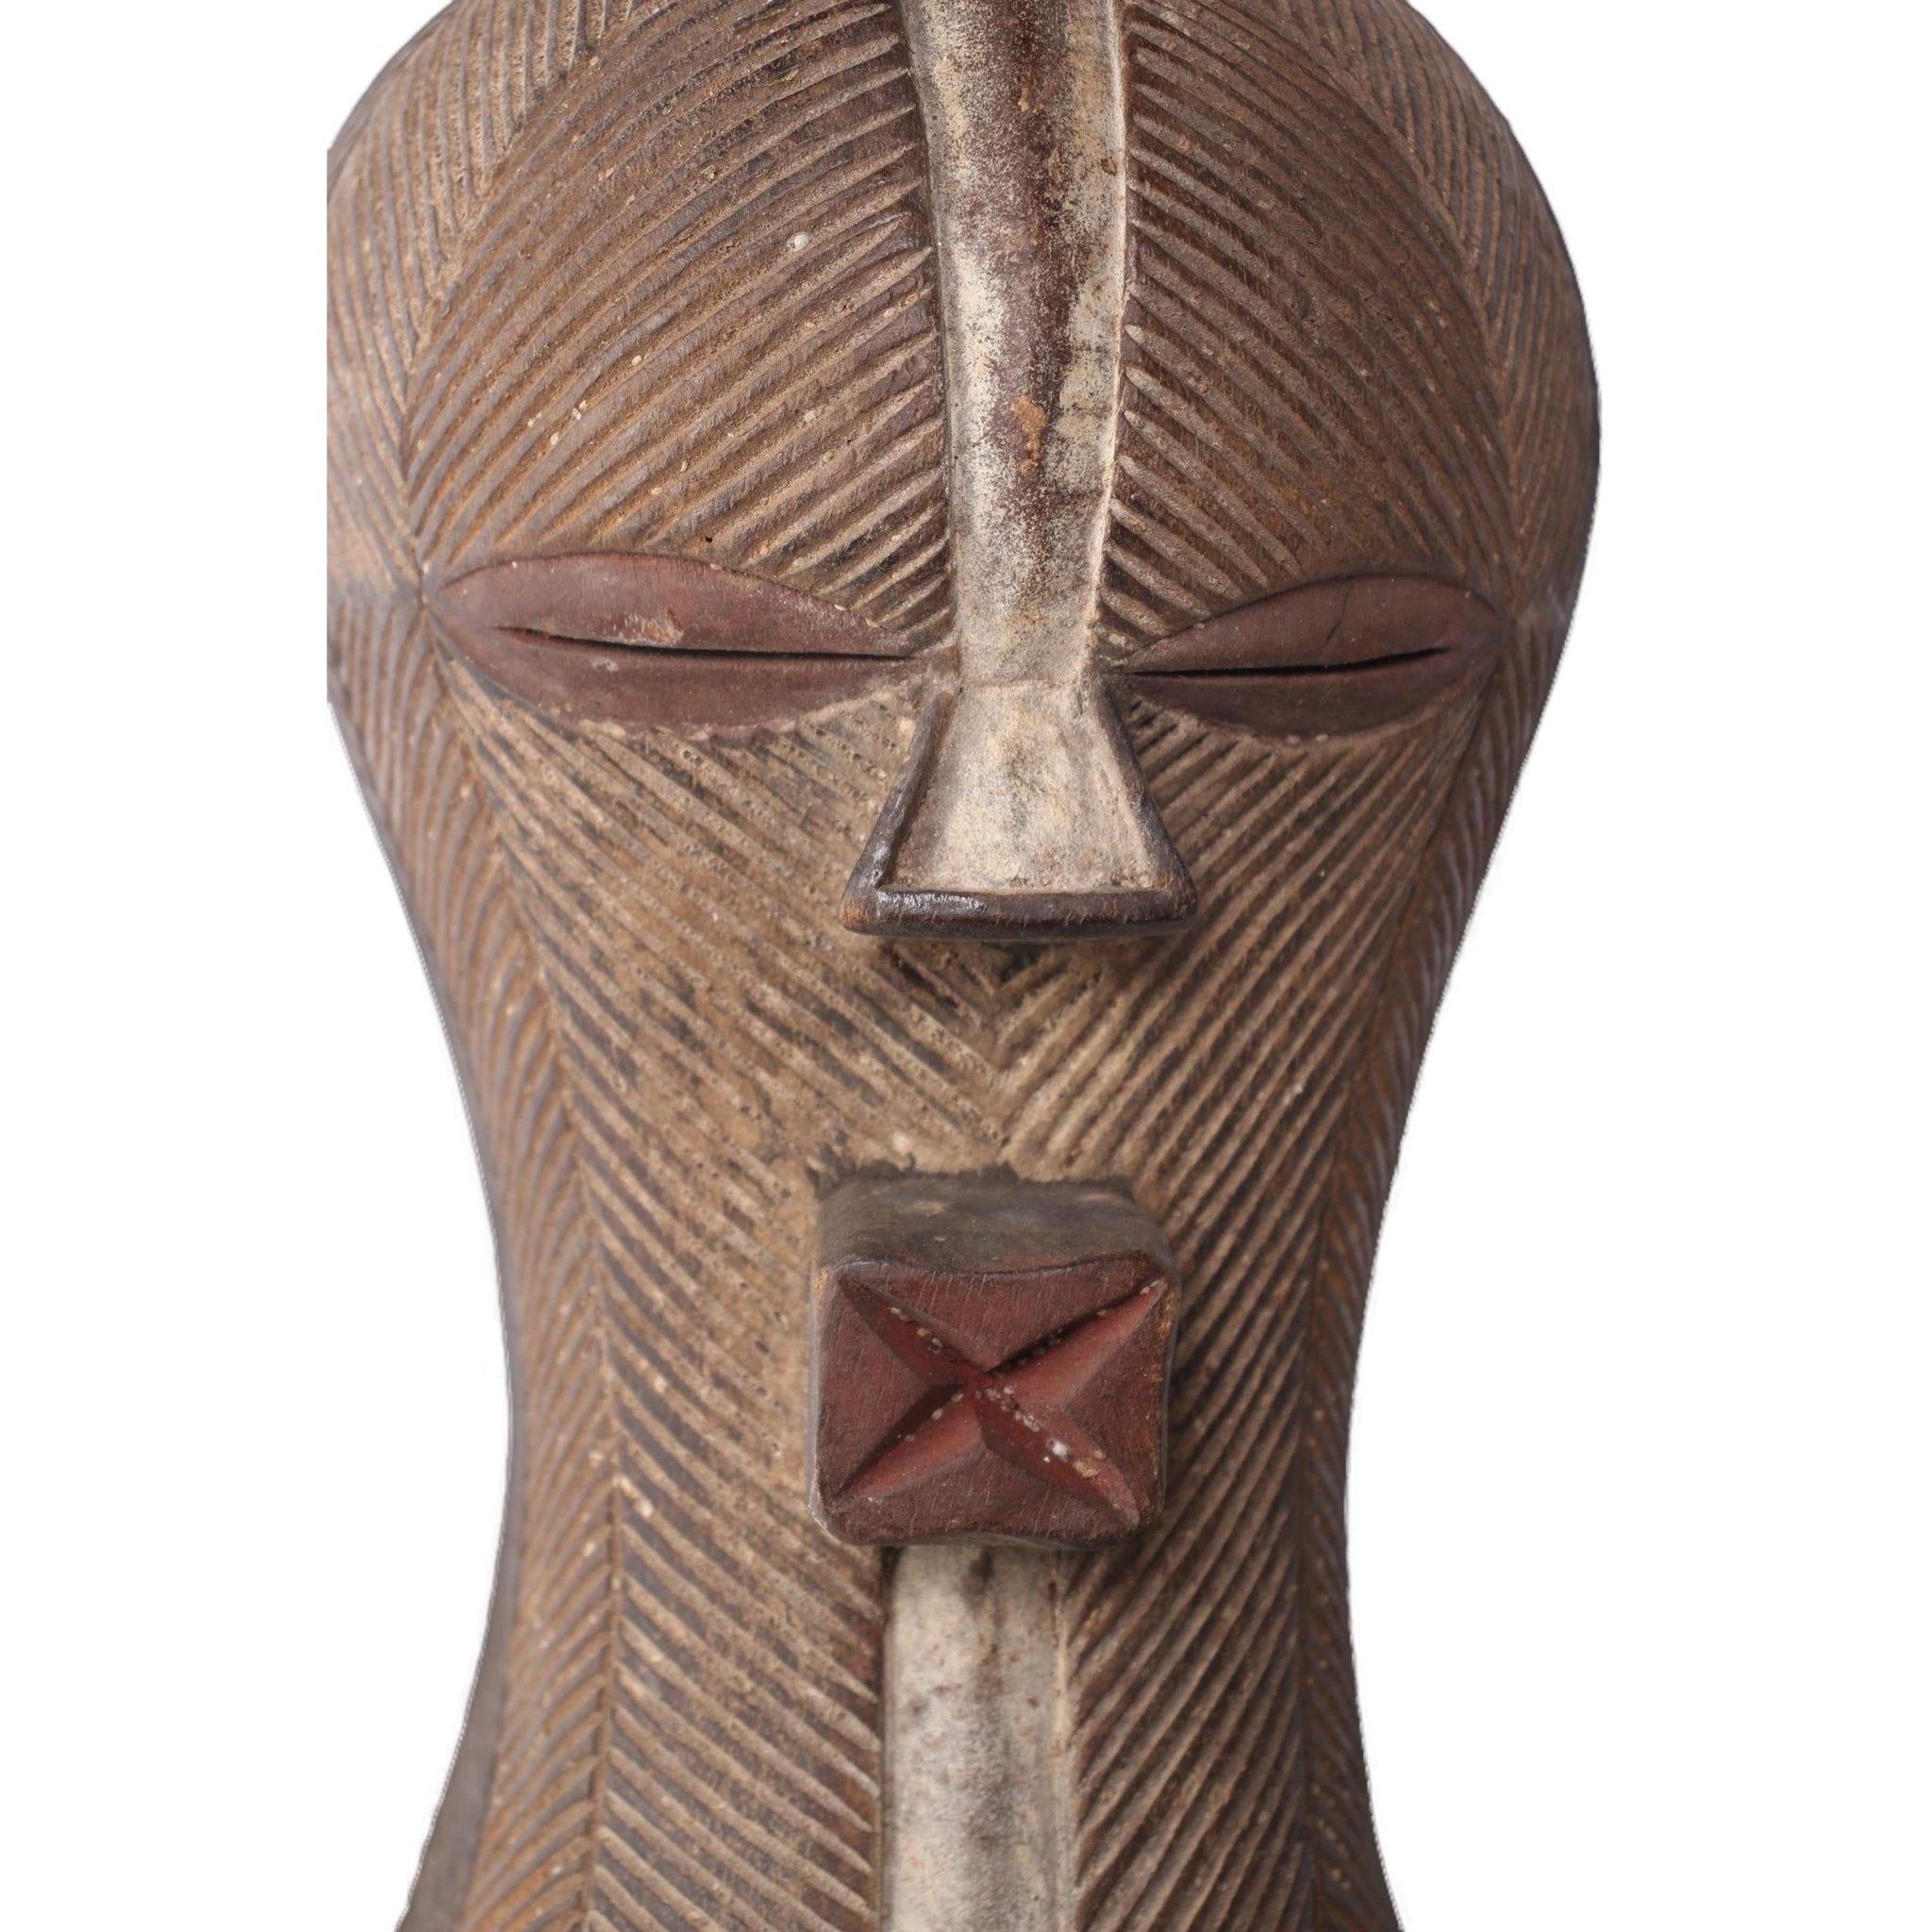 Basonge/Songye Tribe Mask ~12.2" Tall - African Angel Art